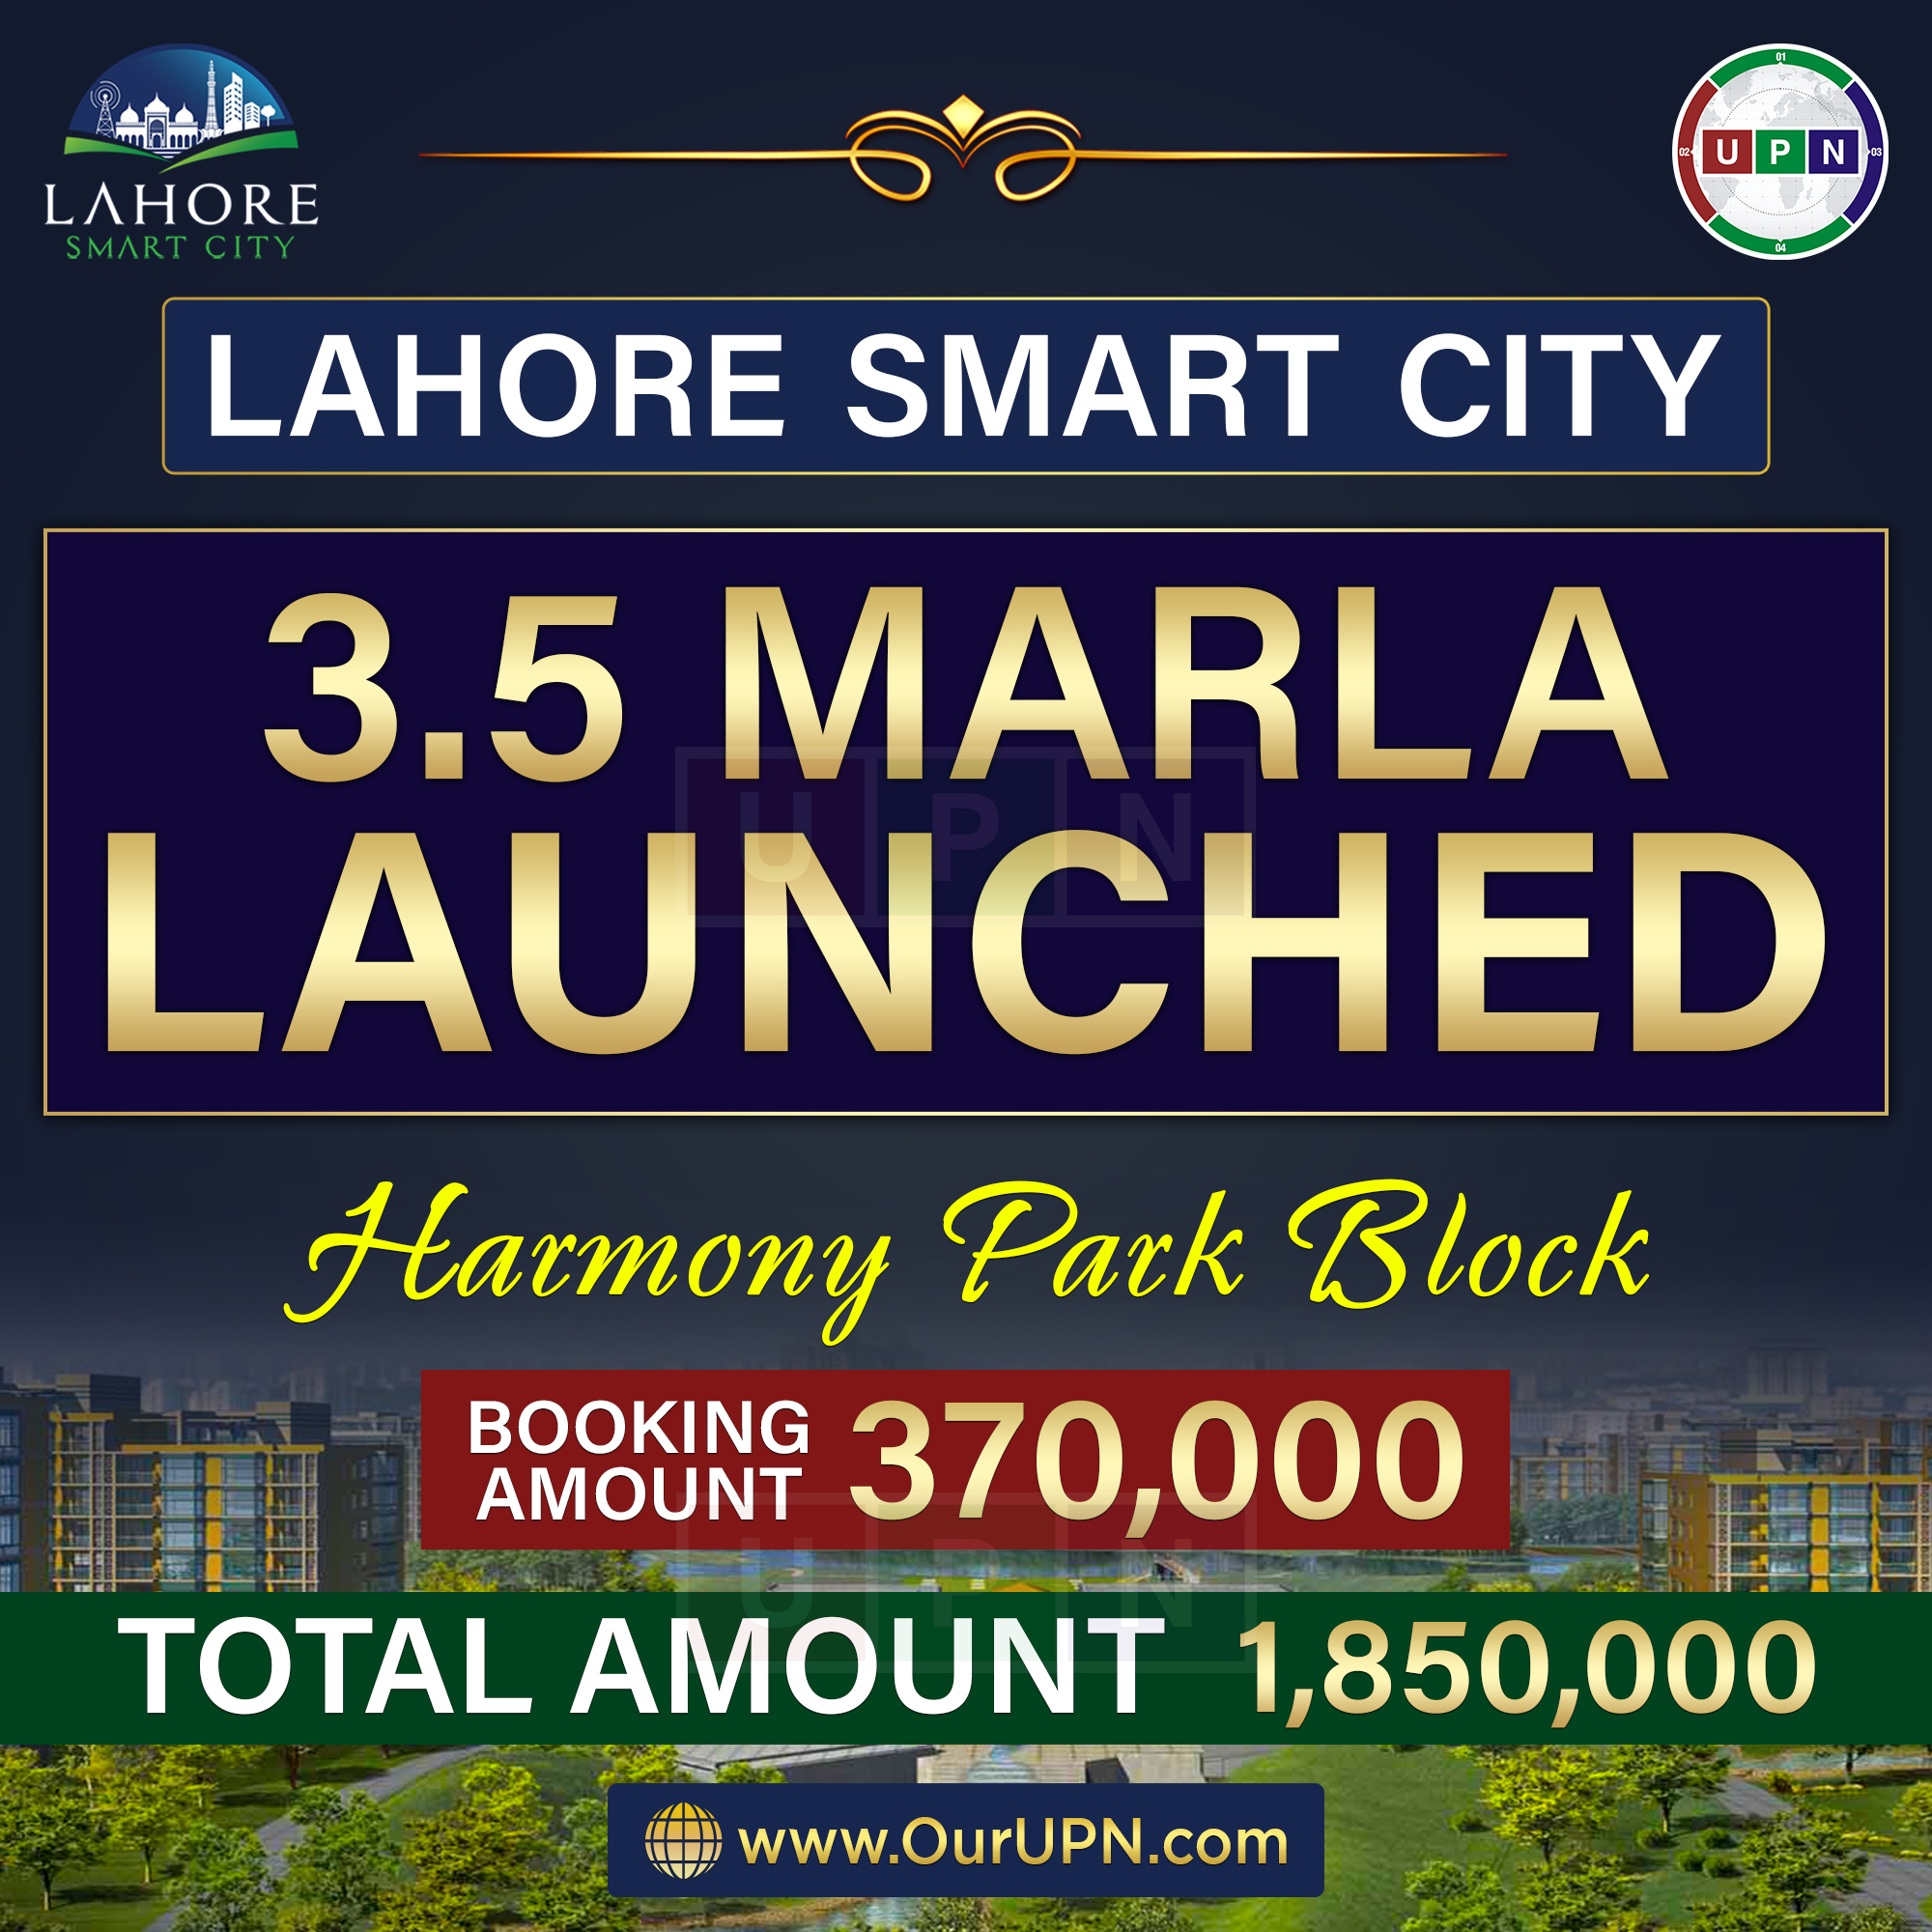 Residential Plot For Sale Smart City Lahore